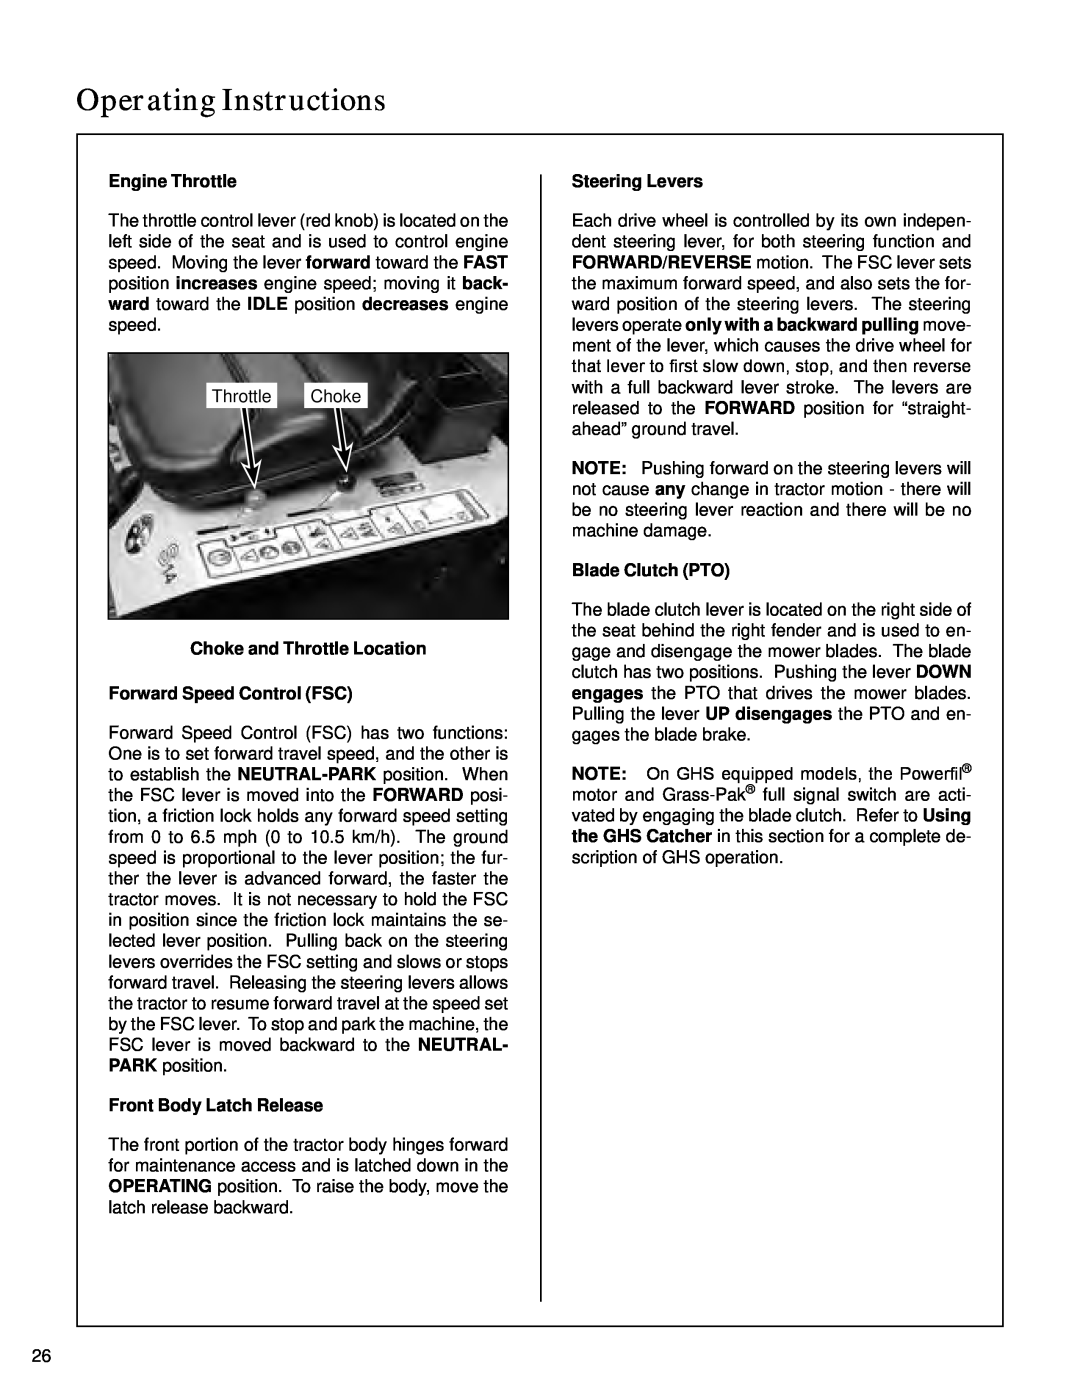 Walker S14 manual Engine Throttle, Choke and Throttle Location, Forward Speed Control FSC, Front Body Latch Release 